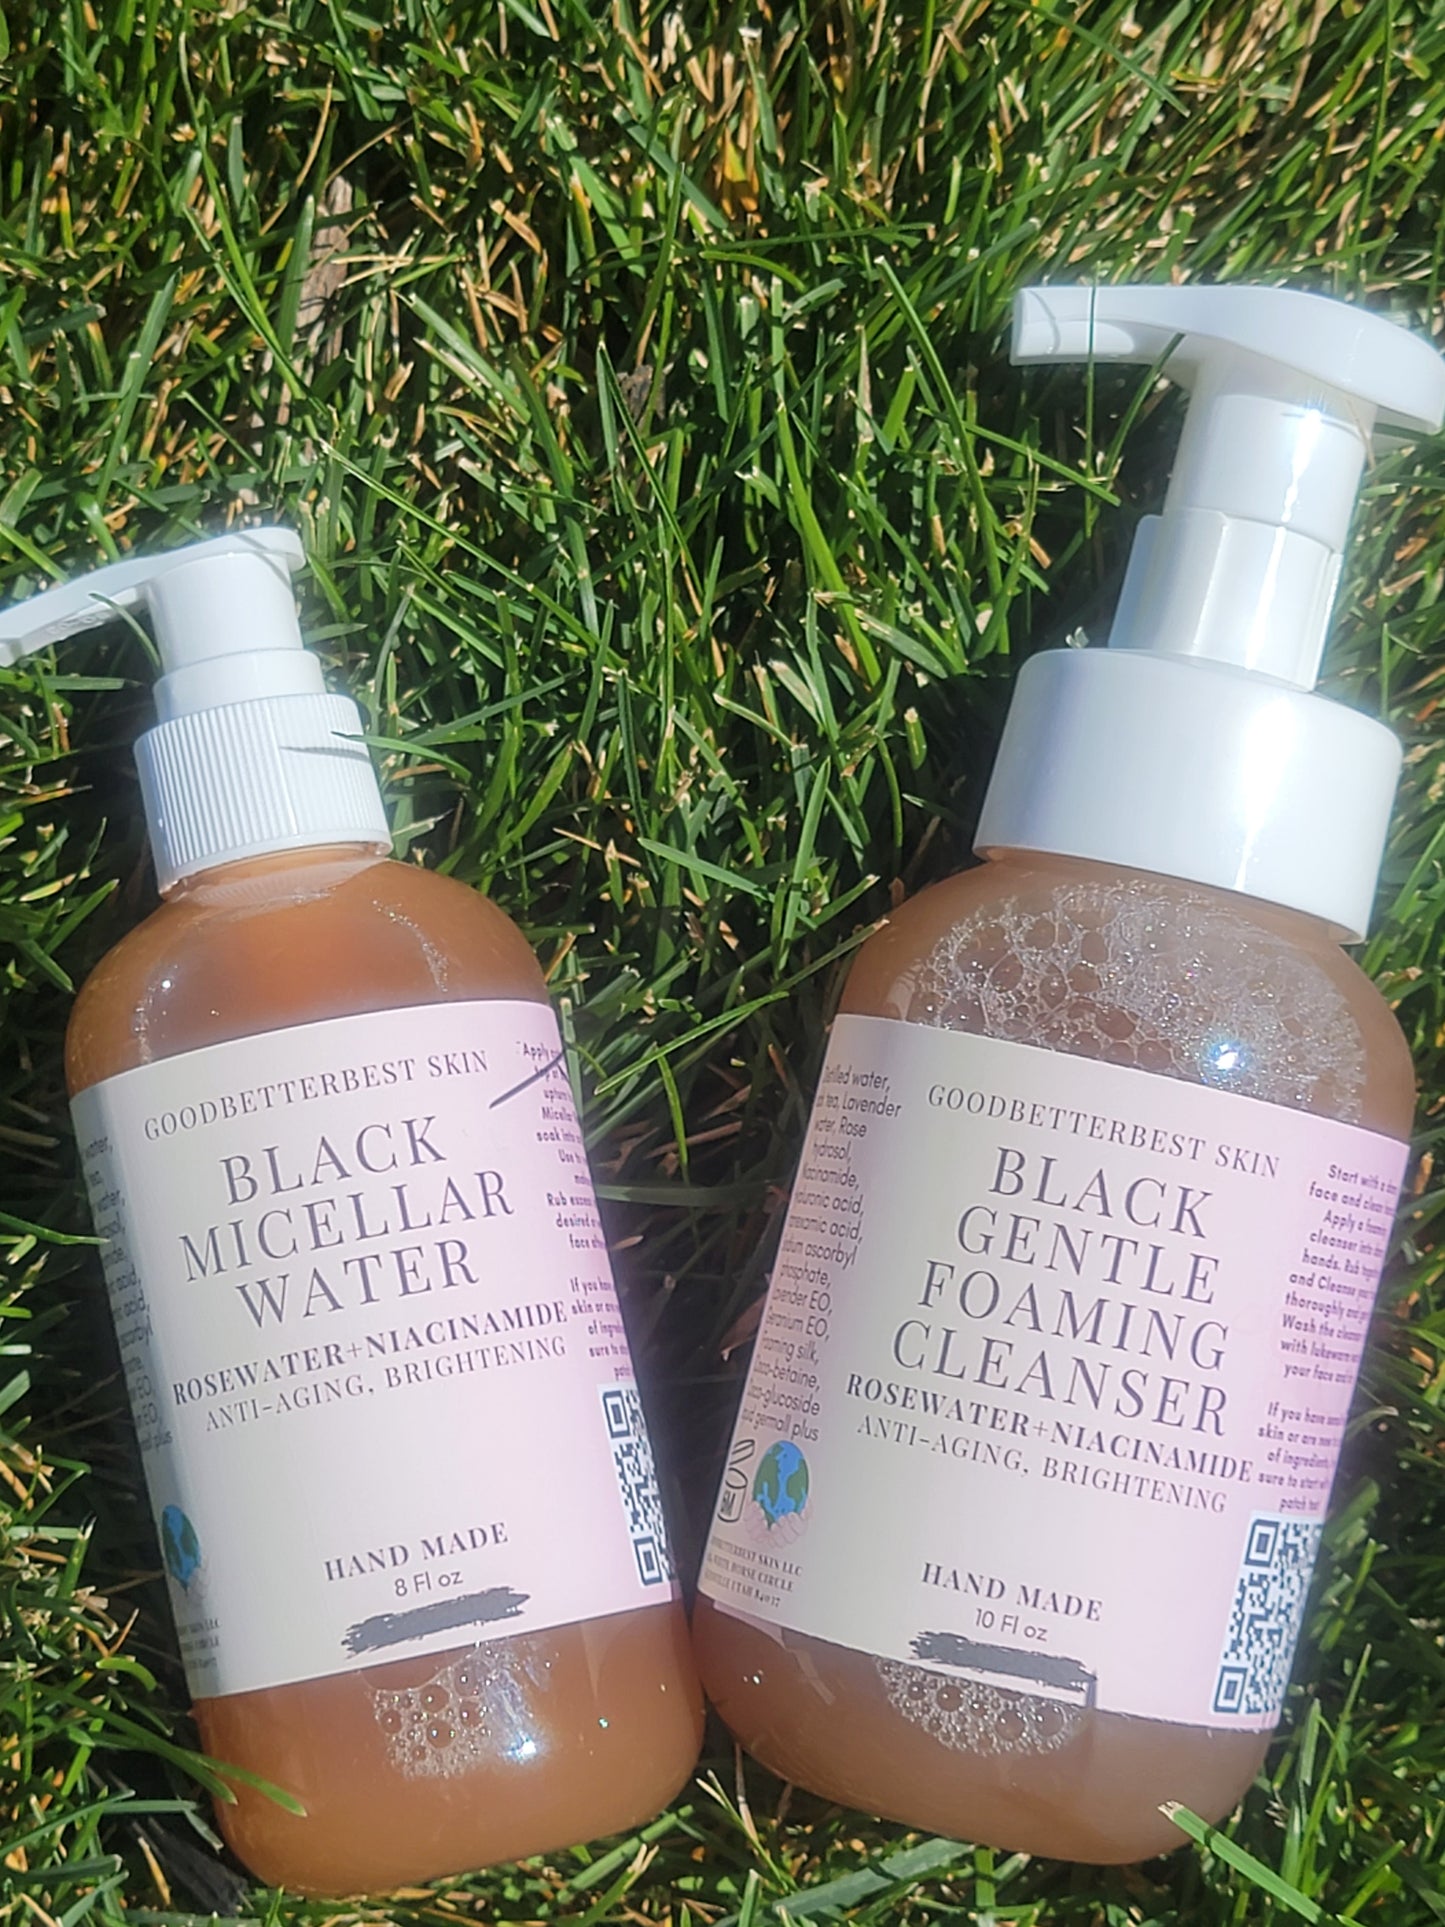 Premium Anti-aging& Brightening Black micellar water (and/or) Black gentle foaming cleanser Inactive